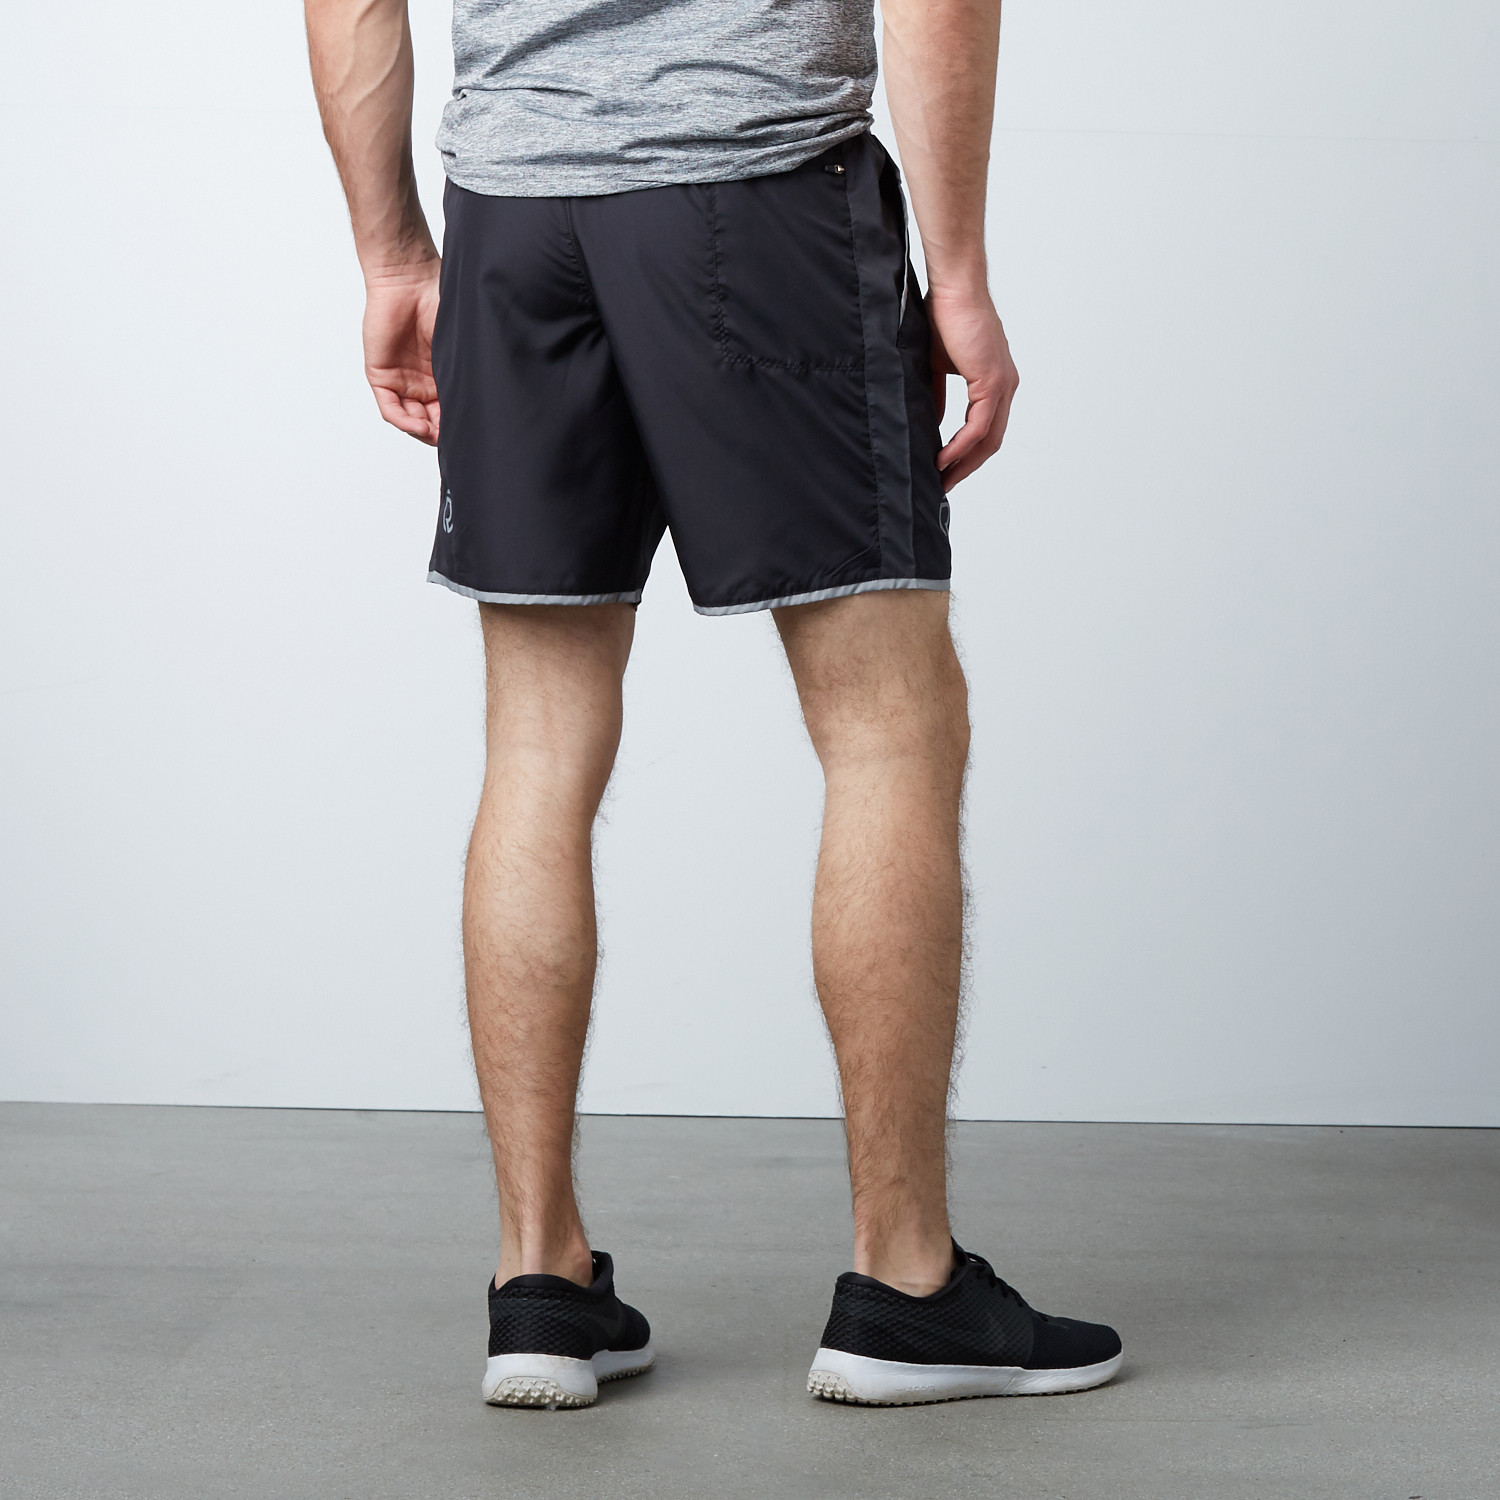 Dry Fit Sports Shorts + Zipper Back Pocket // Black (S) - TrueREVO ...